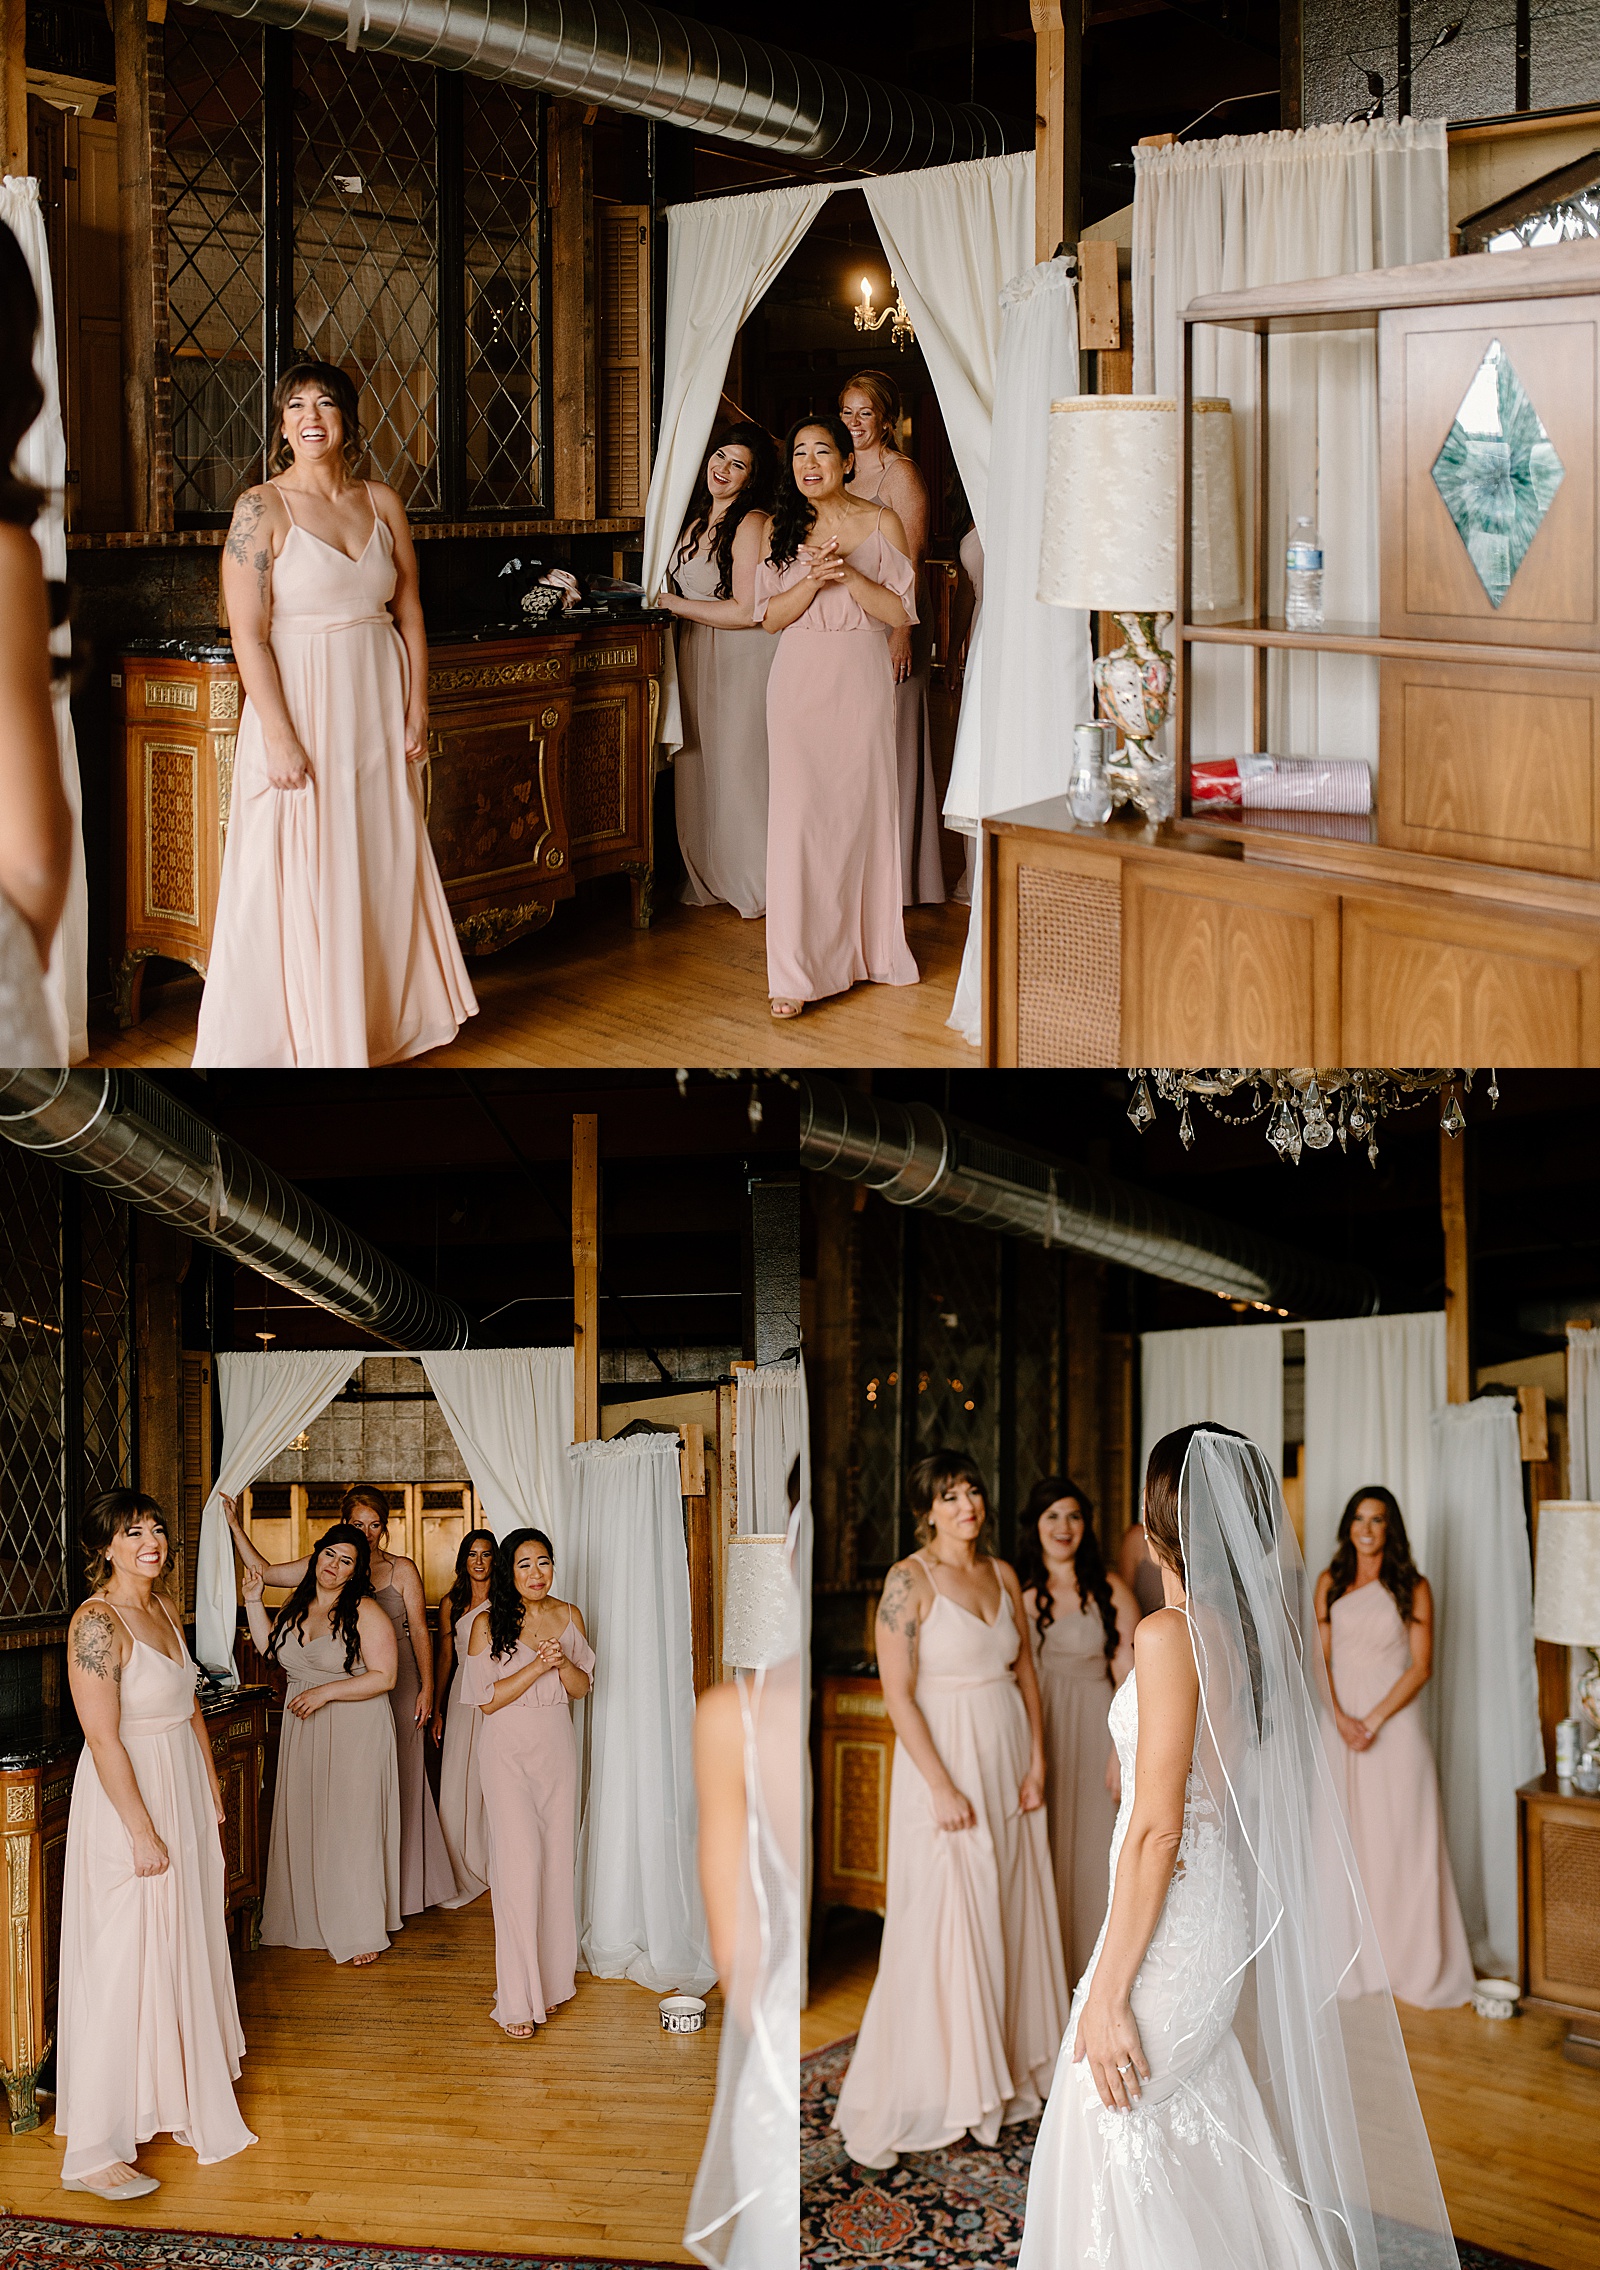 Bridesmaids first reveal in rustic, vintage bridal suite